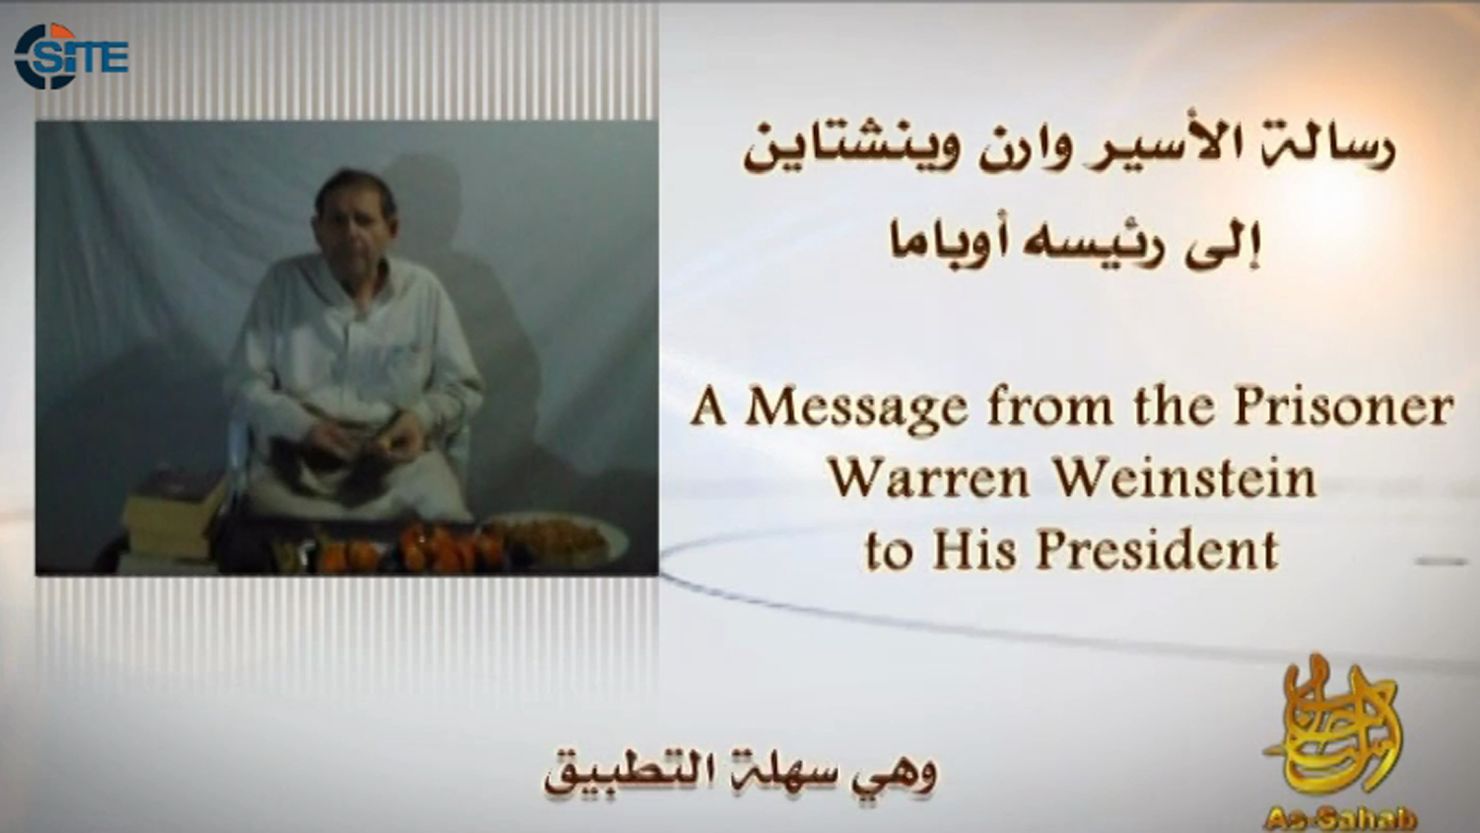 A screengrab shows Warren Weinstein urging U.S. President Barack Obama to answer al-Qaeda's demands or he will be killed. 